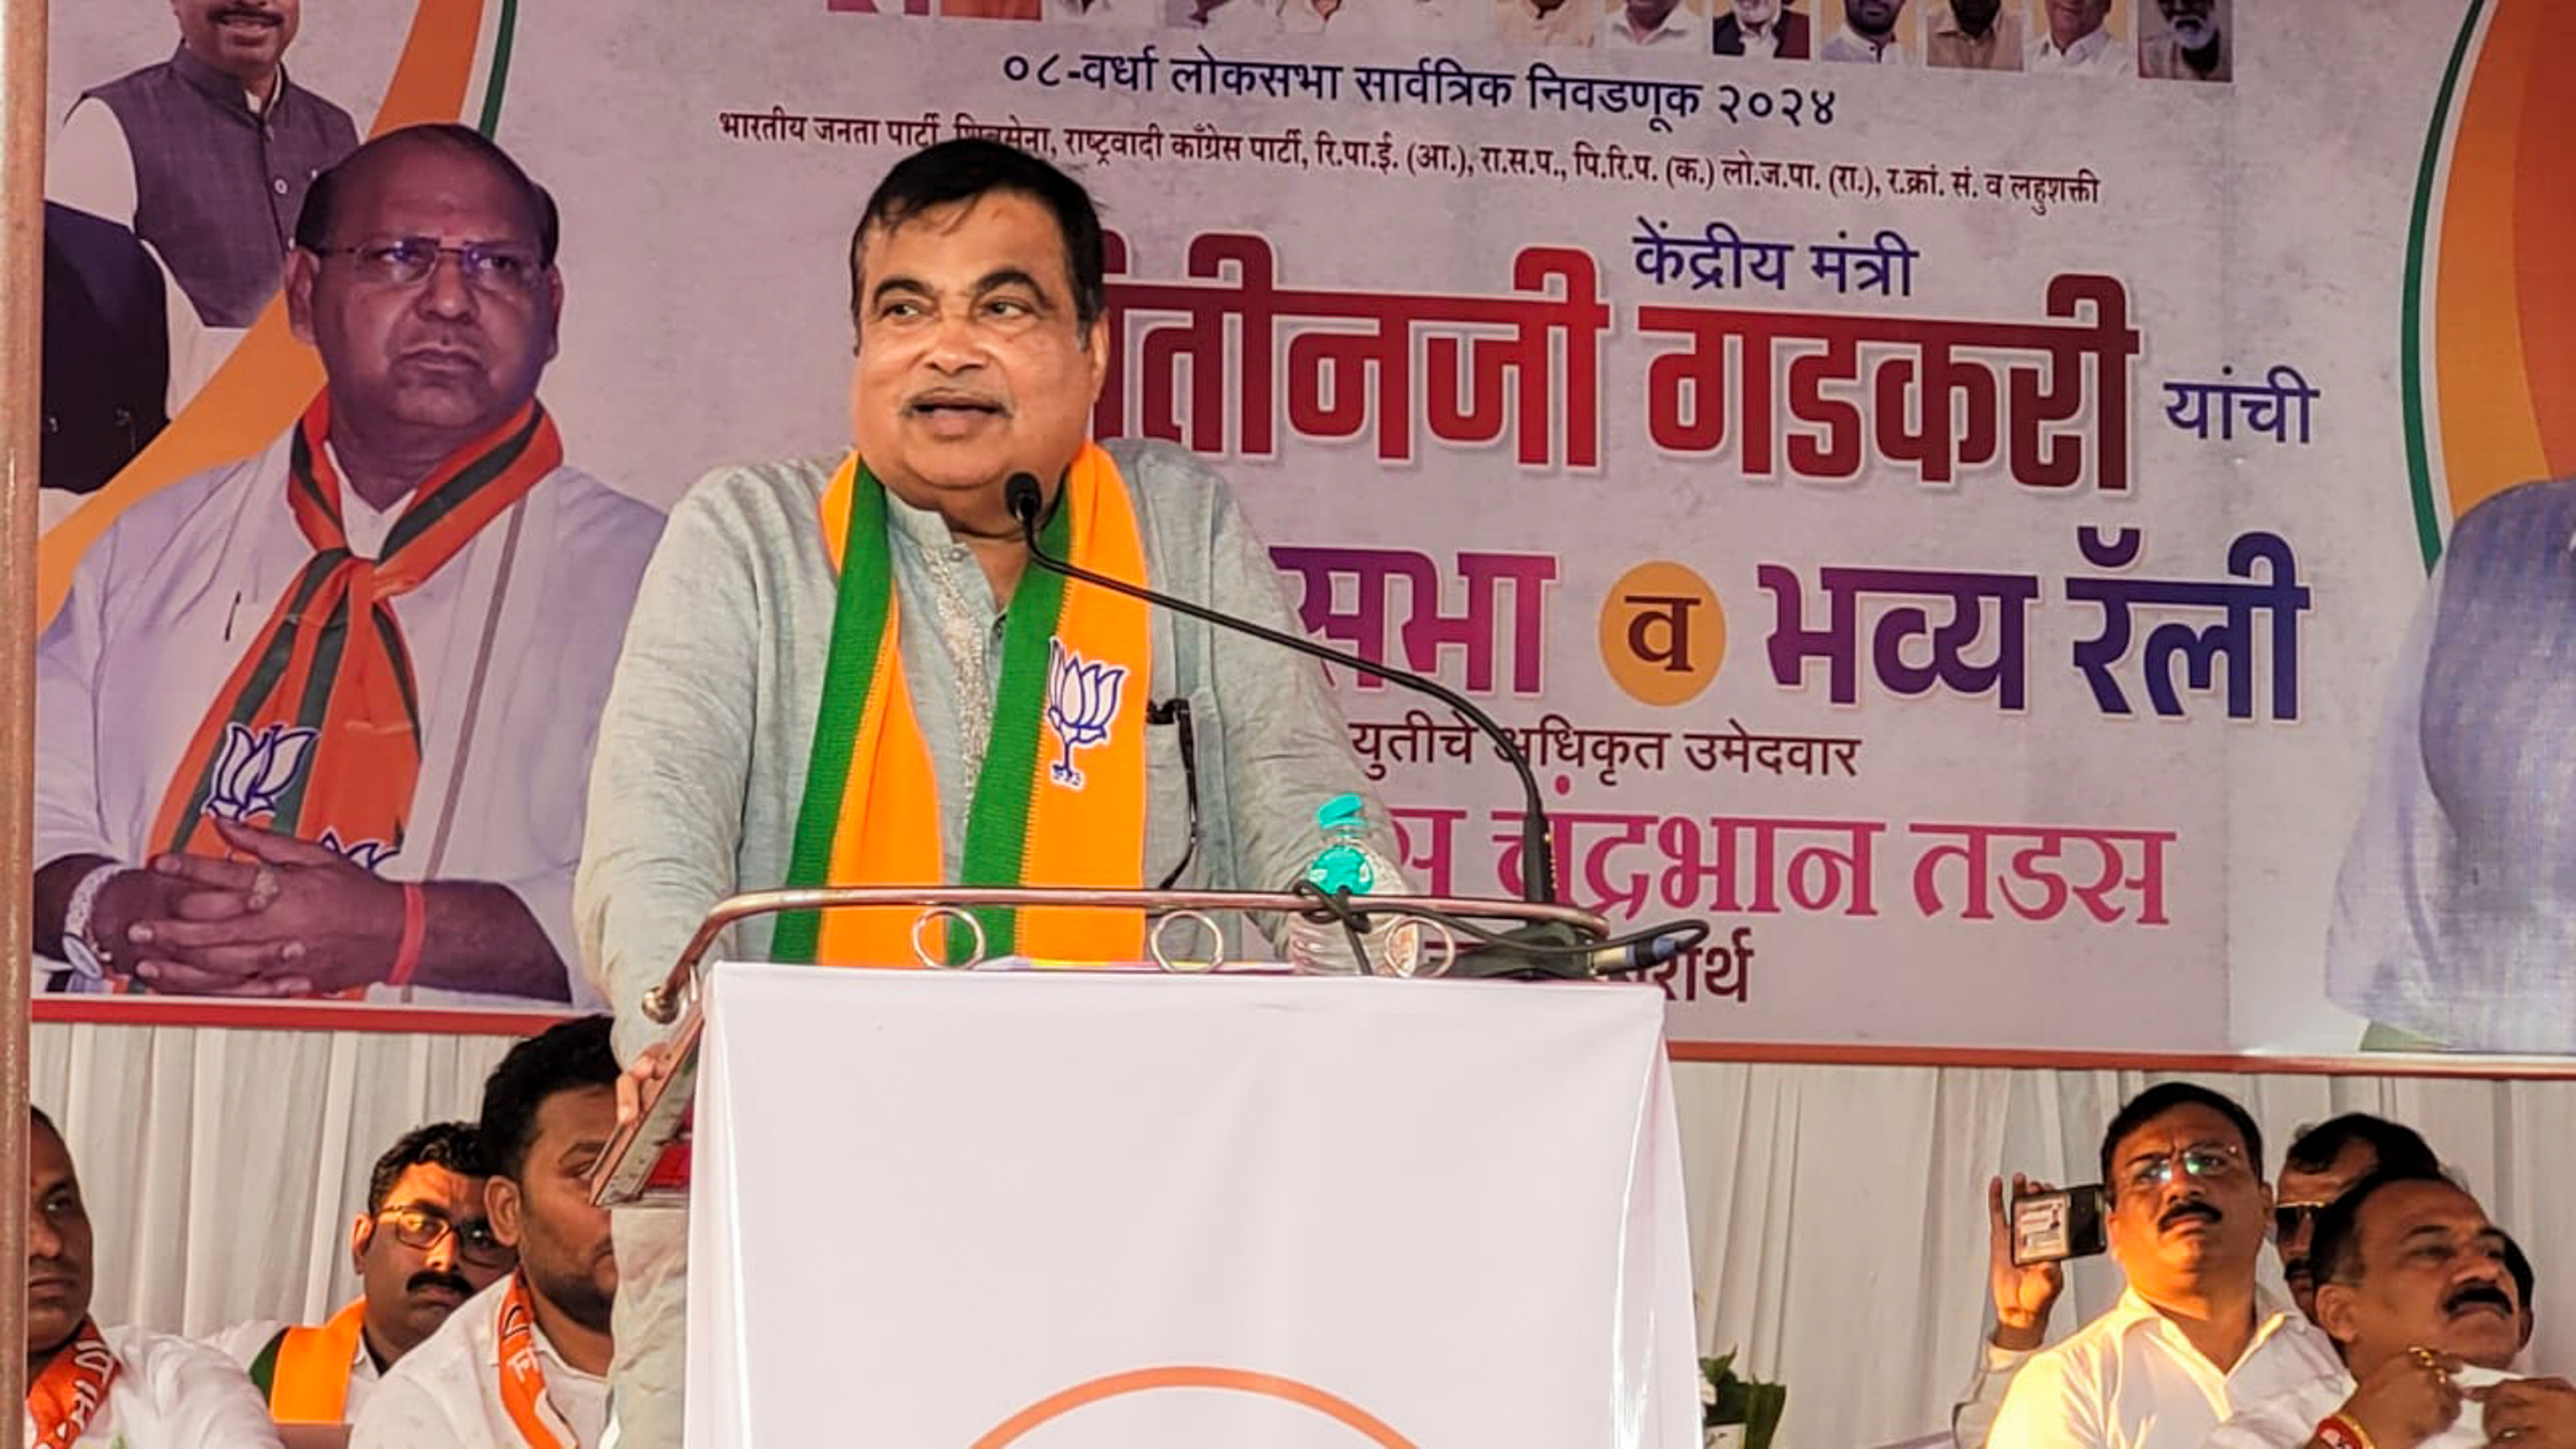 <div class="paragraphs"><p>Union Minister and BJP leader Nitin Gadkari  in Amravati district.</p></div>